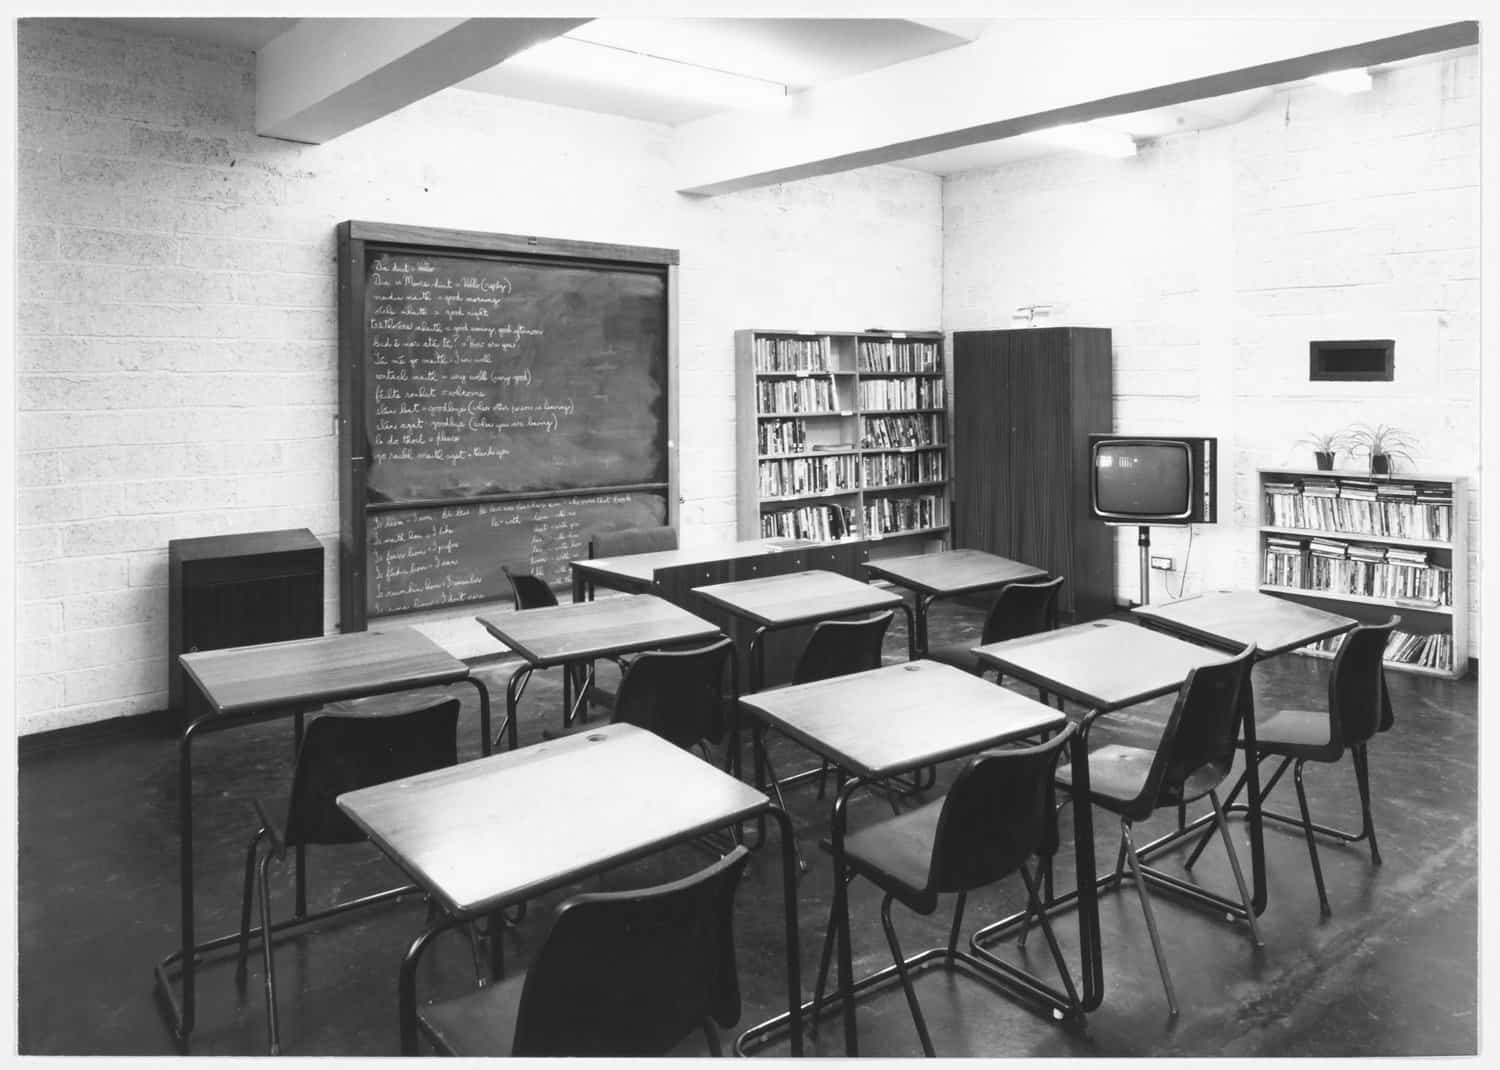 H-Block classroom, 1981